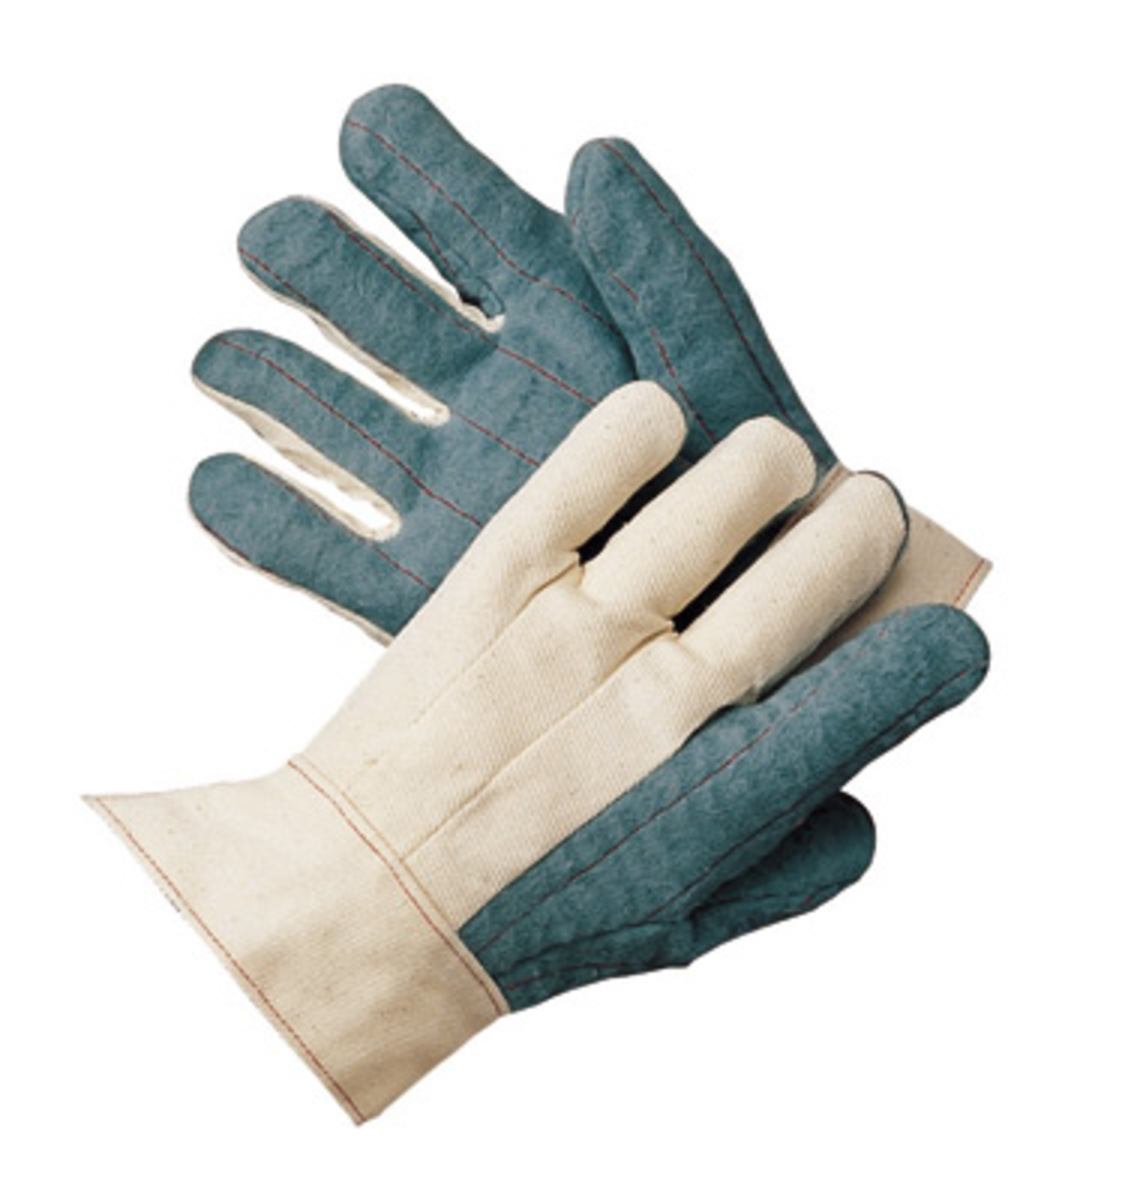 Hot Mill Gloves for sale online